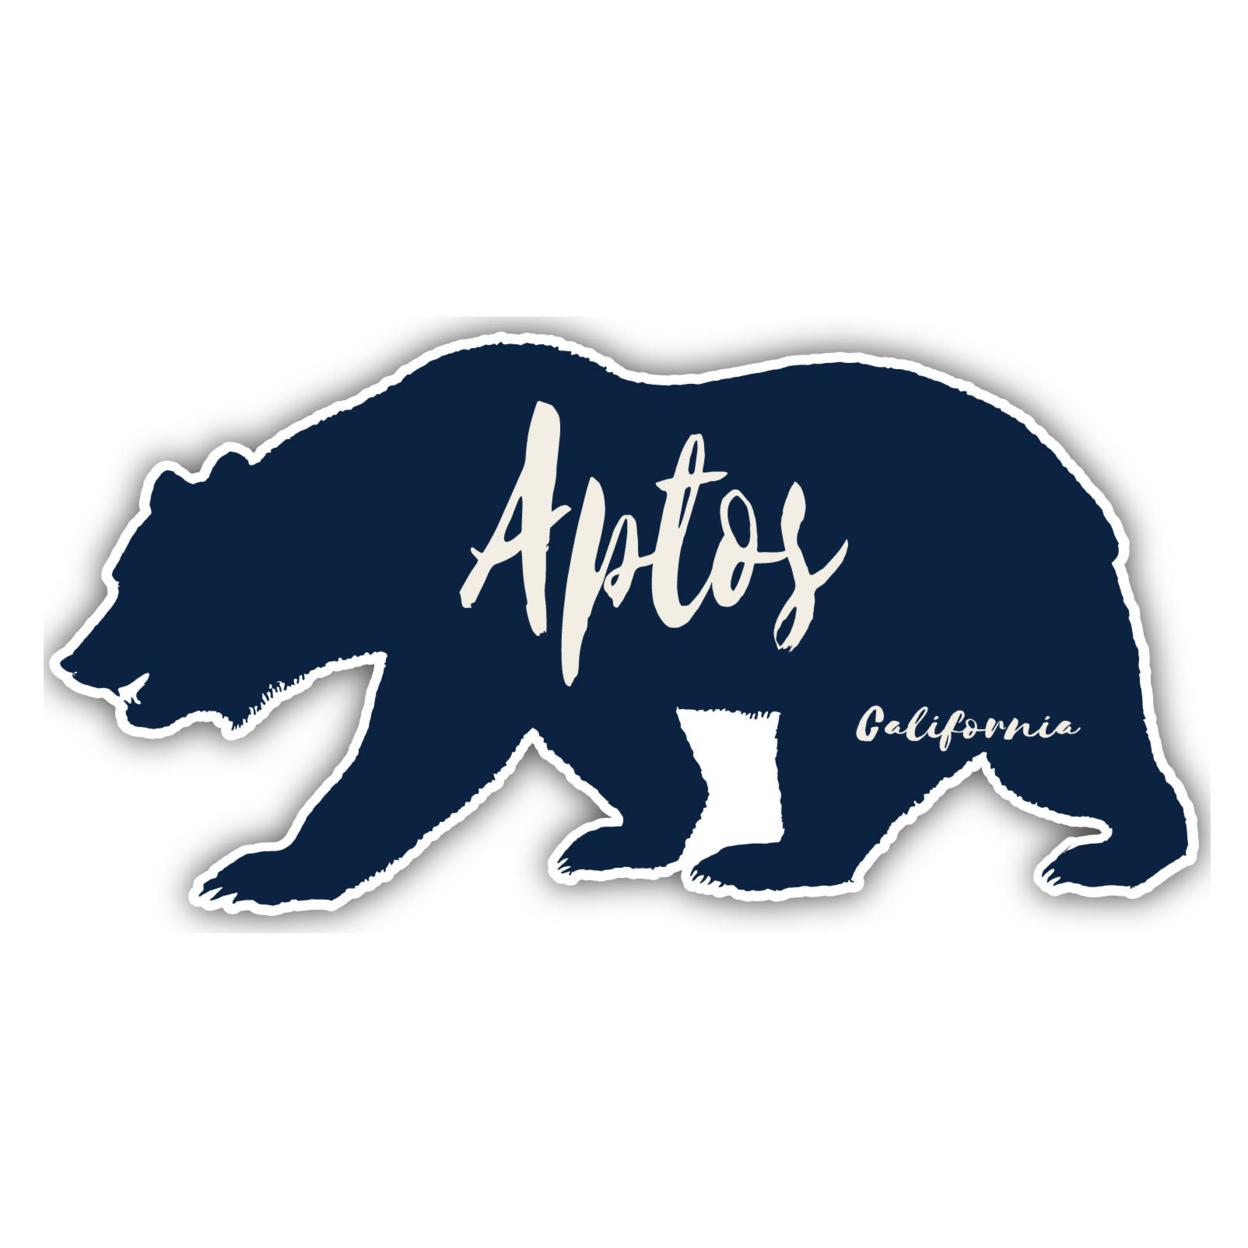 Aptos California Souvenir Decorative Stickers (Choose Theme And Size) - 4-Pack, 4-Inch, Adventures Awaits